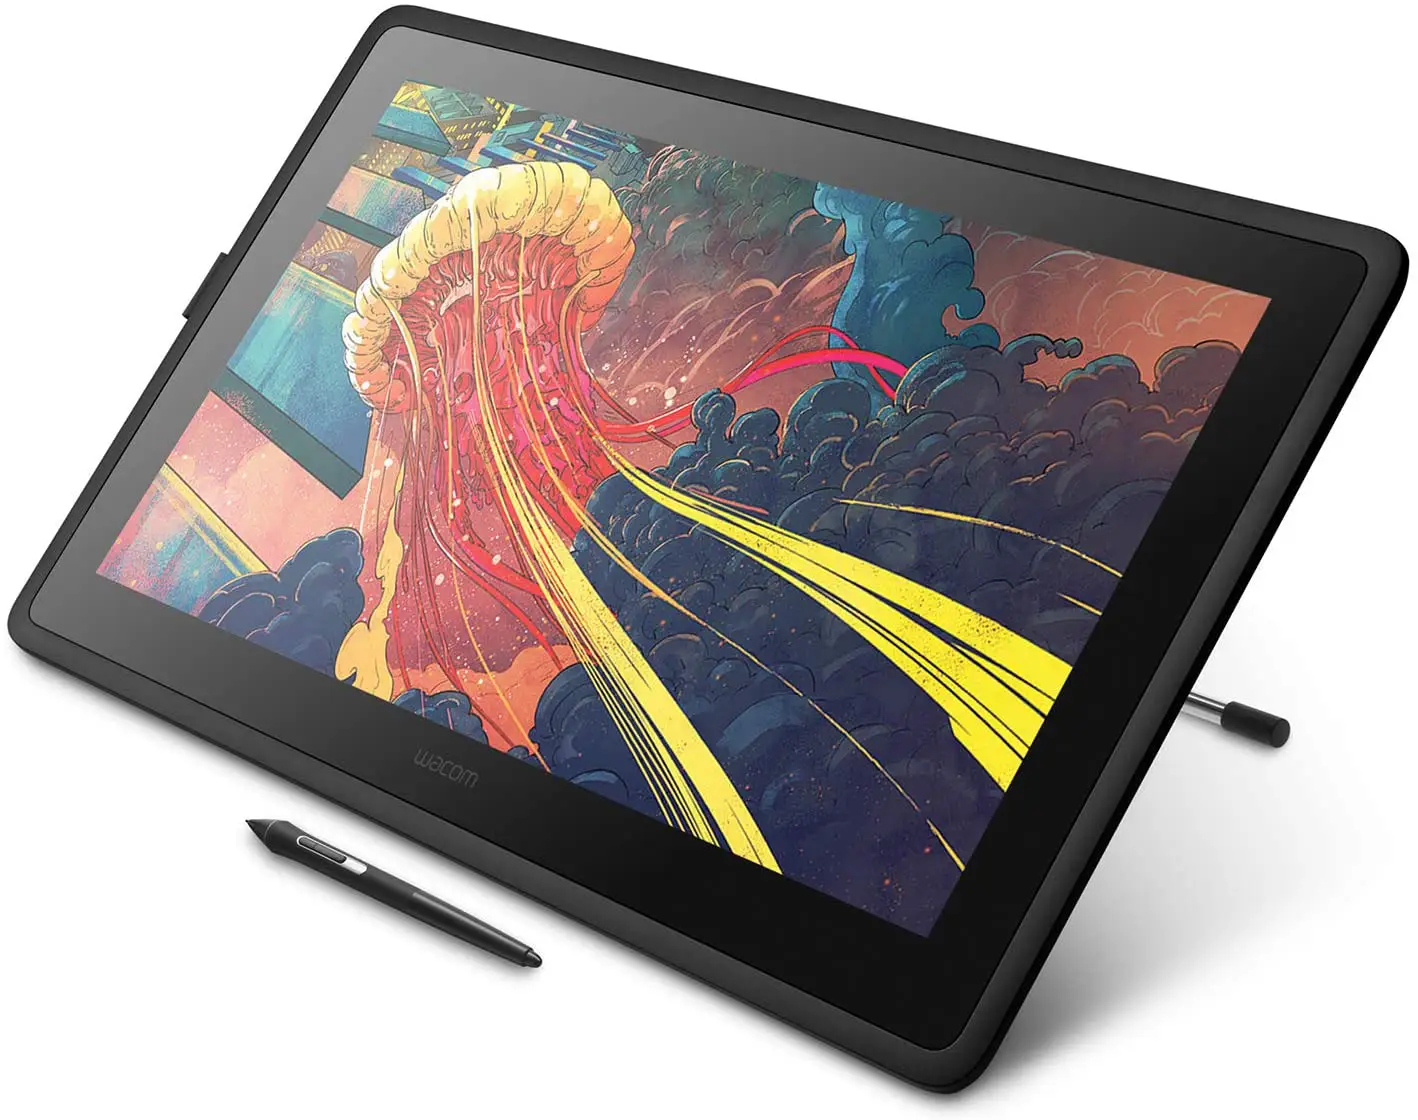 Kaap spek mooi 10 Best Wacom Tablets for Graphic Design, Drawing & Art